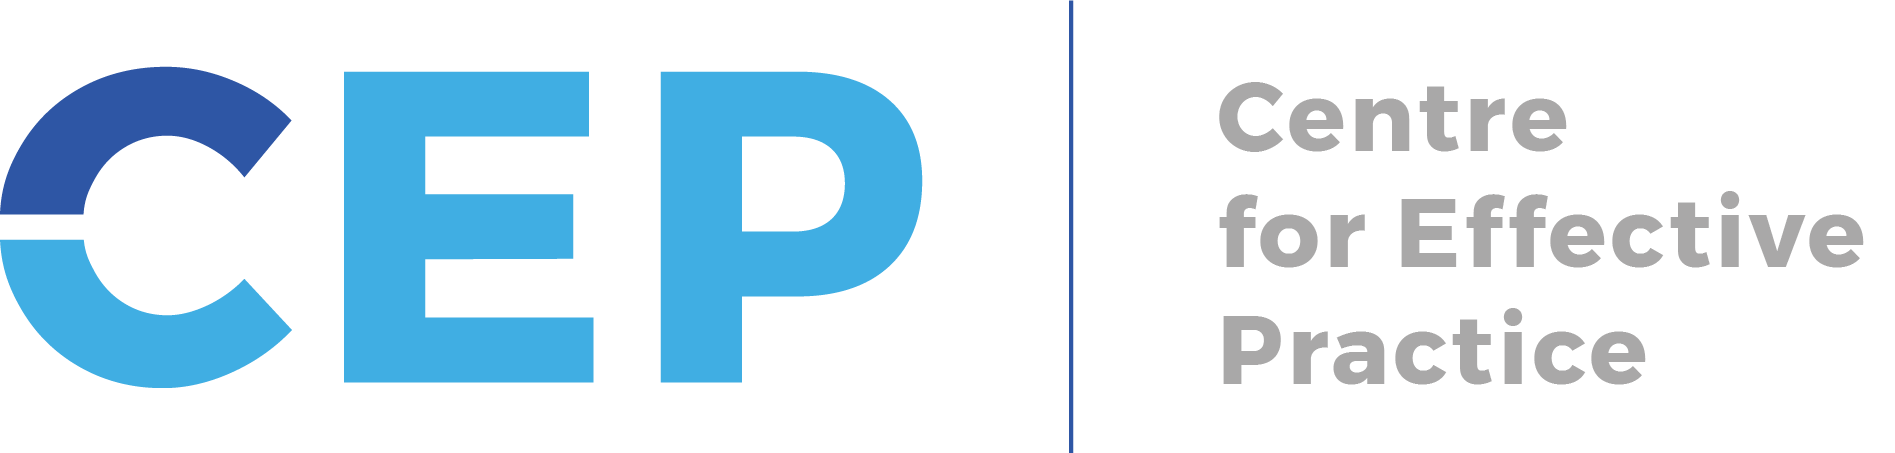 CEP-Main logo